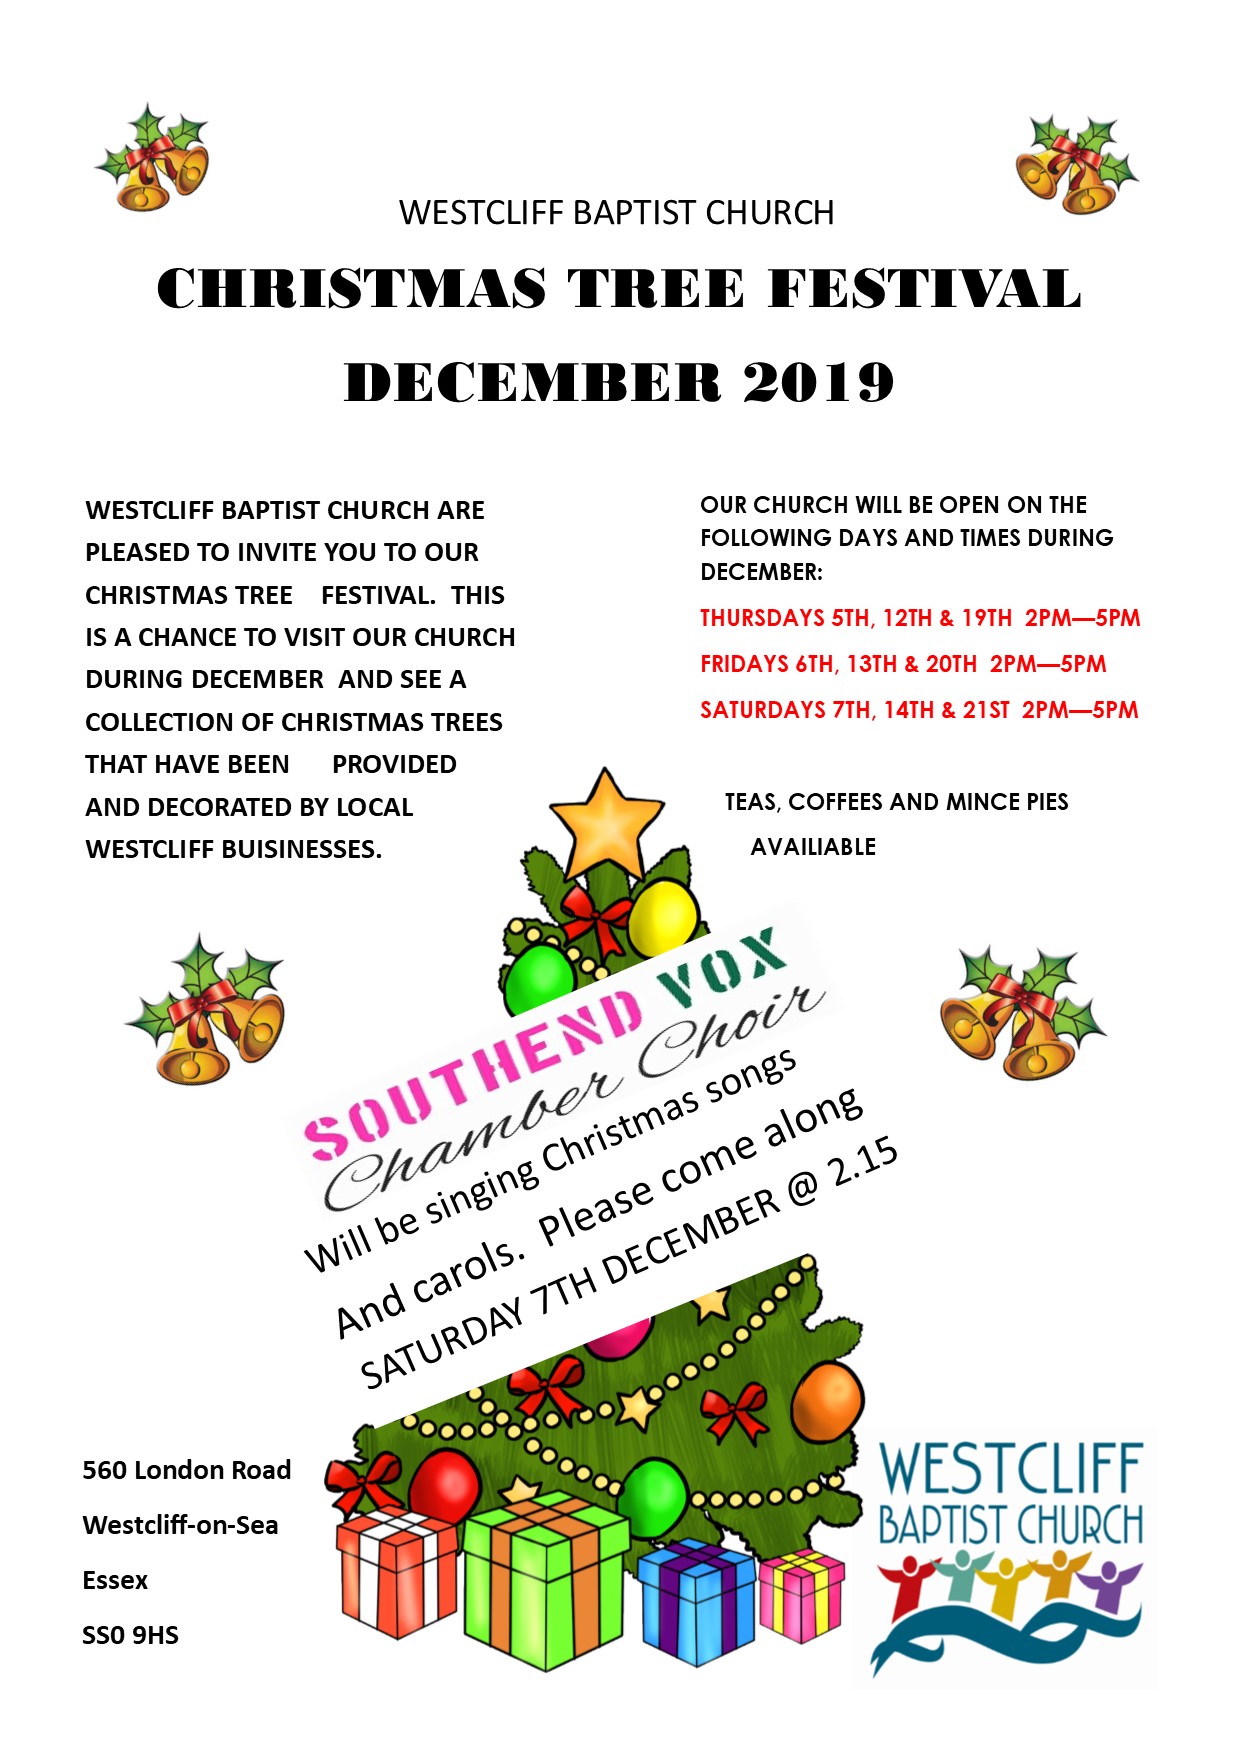 Westcliff Baptist Church Christmas Tree Festival